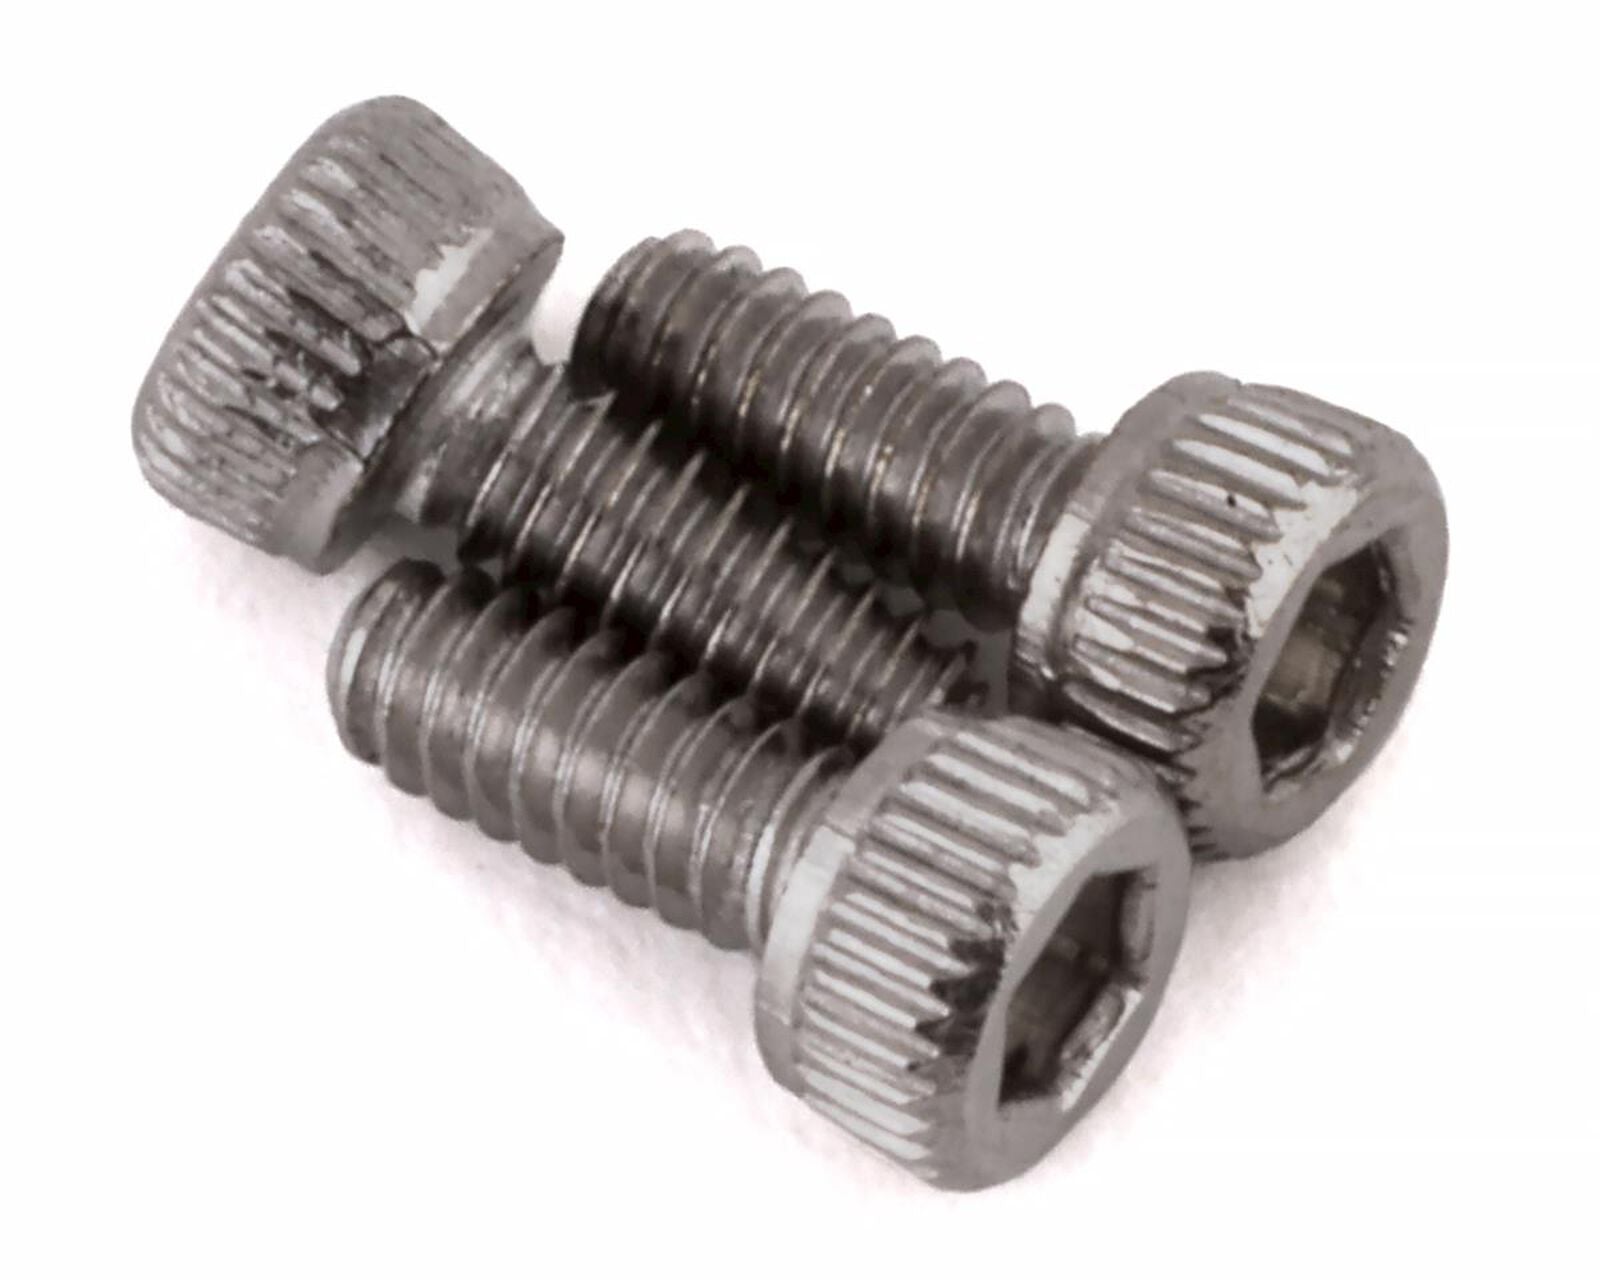 SCX24 1.0” Aluminum/Brass 5-Slot Beadlock Wheels (Silver) (2) (24g)